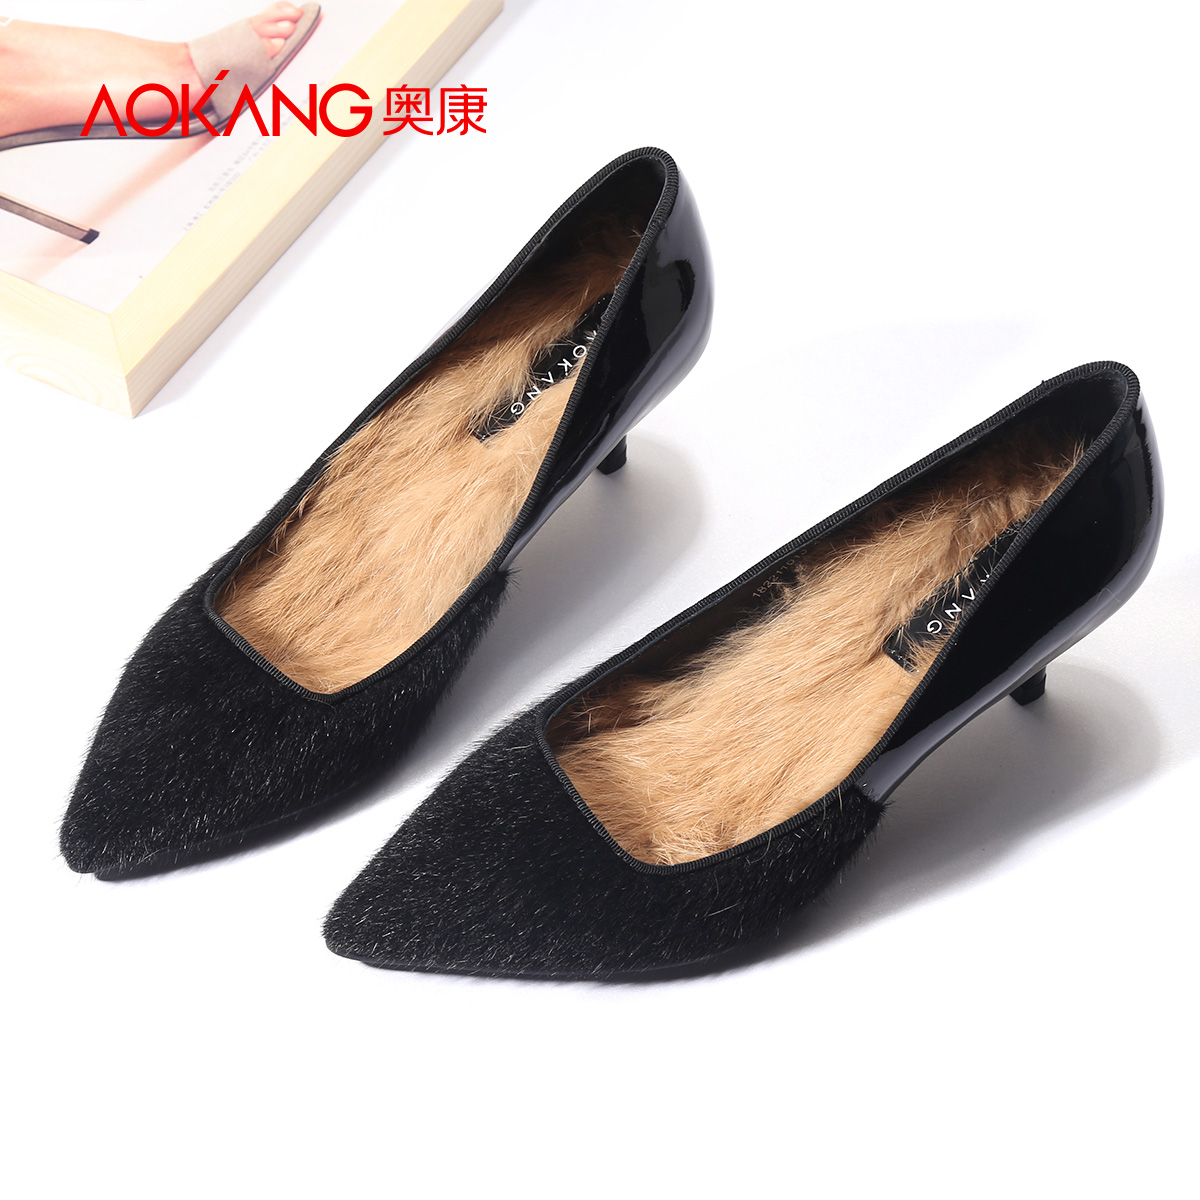 Aokang 2018 autumn new women's shoes pointed plus velvet women's shoes stiletto plush shoes fashion casual shoes